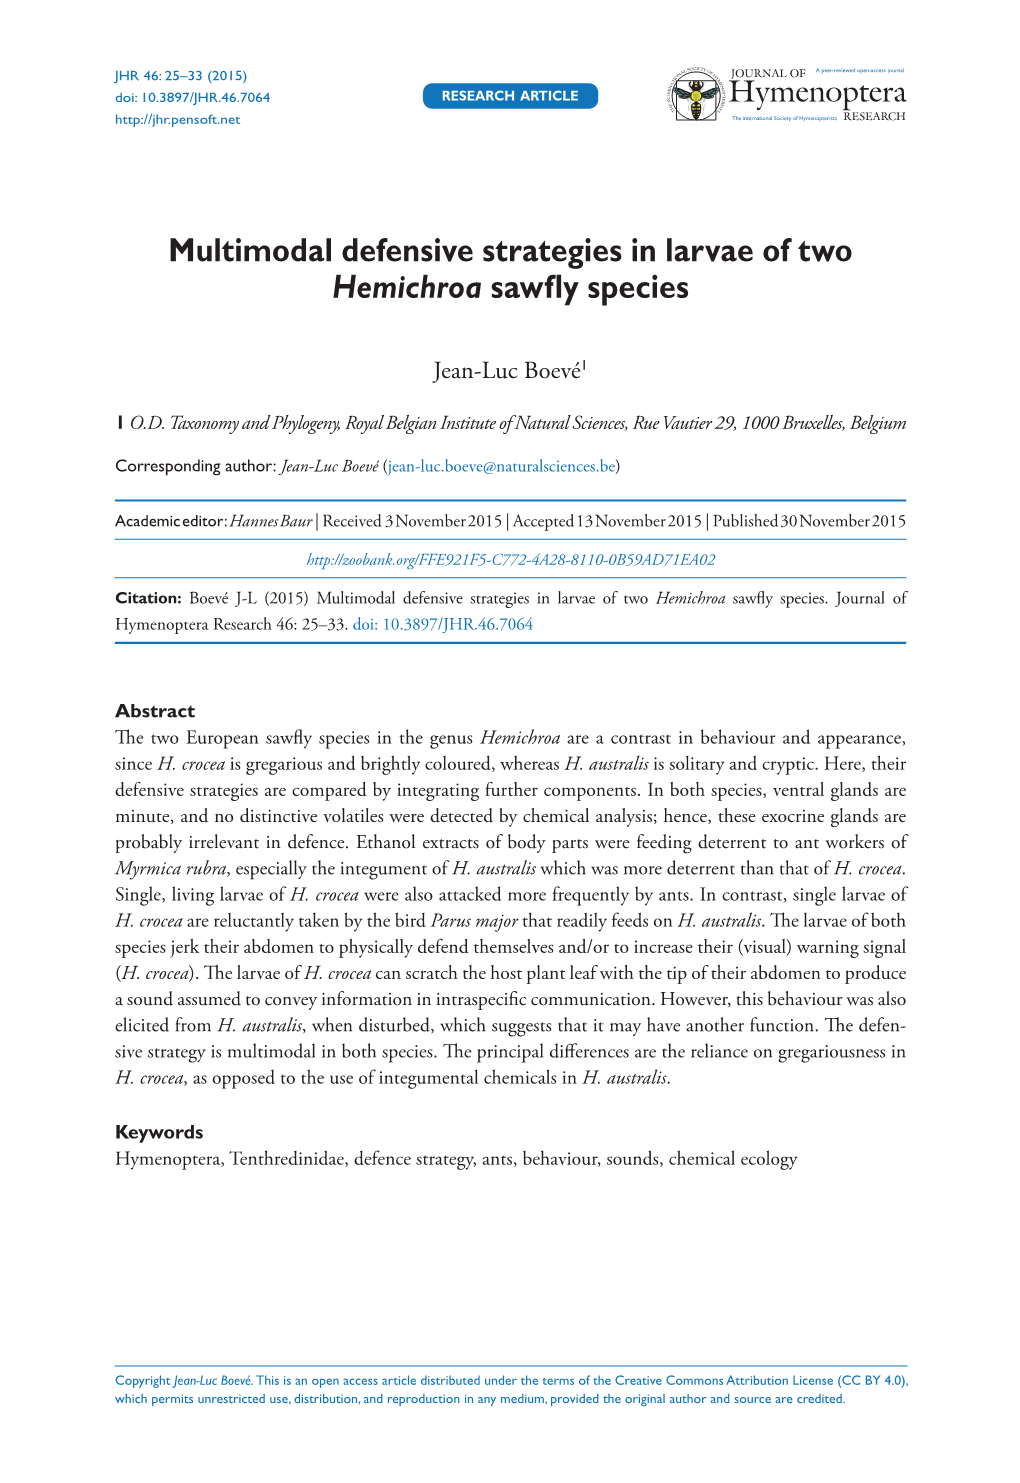 ﻿Multimodal Defensive Strategies in Larvae of Two Hemichroa Sawfly